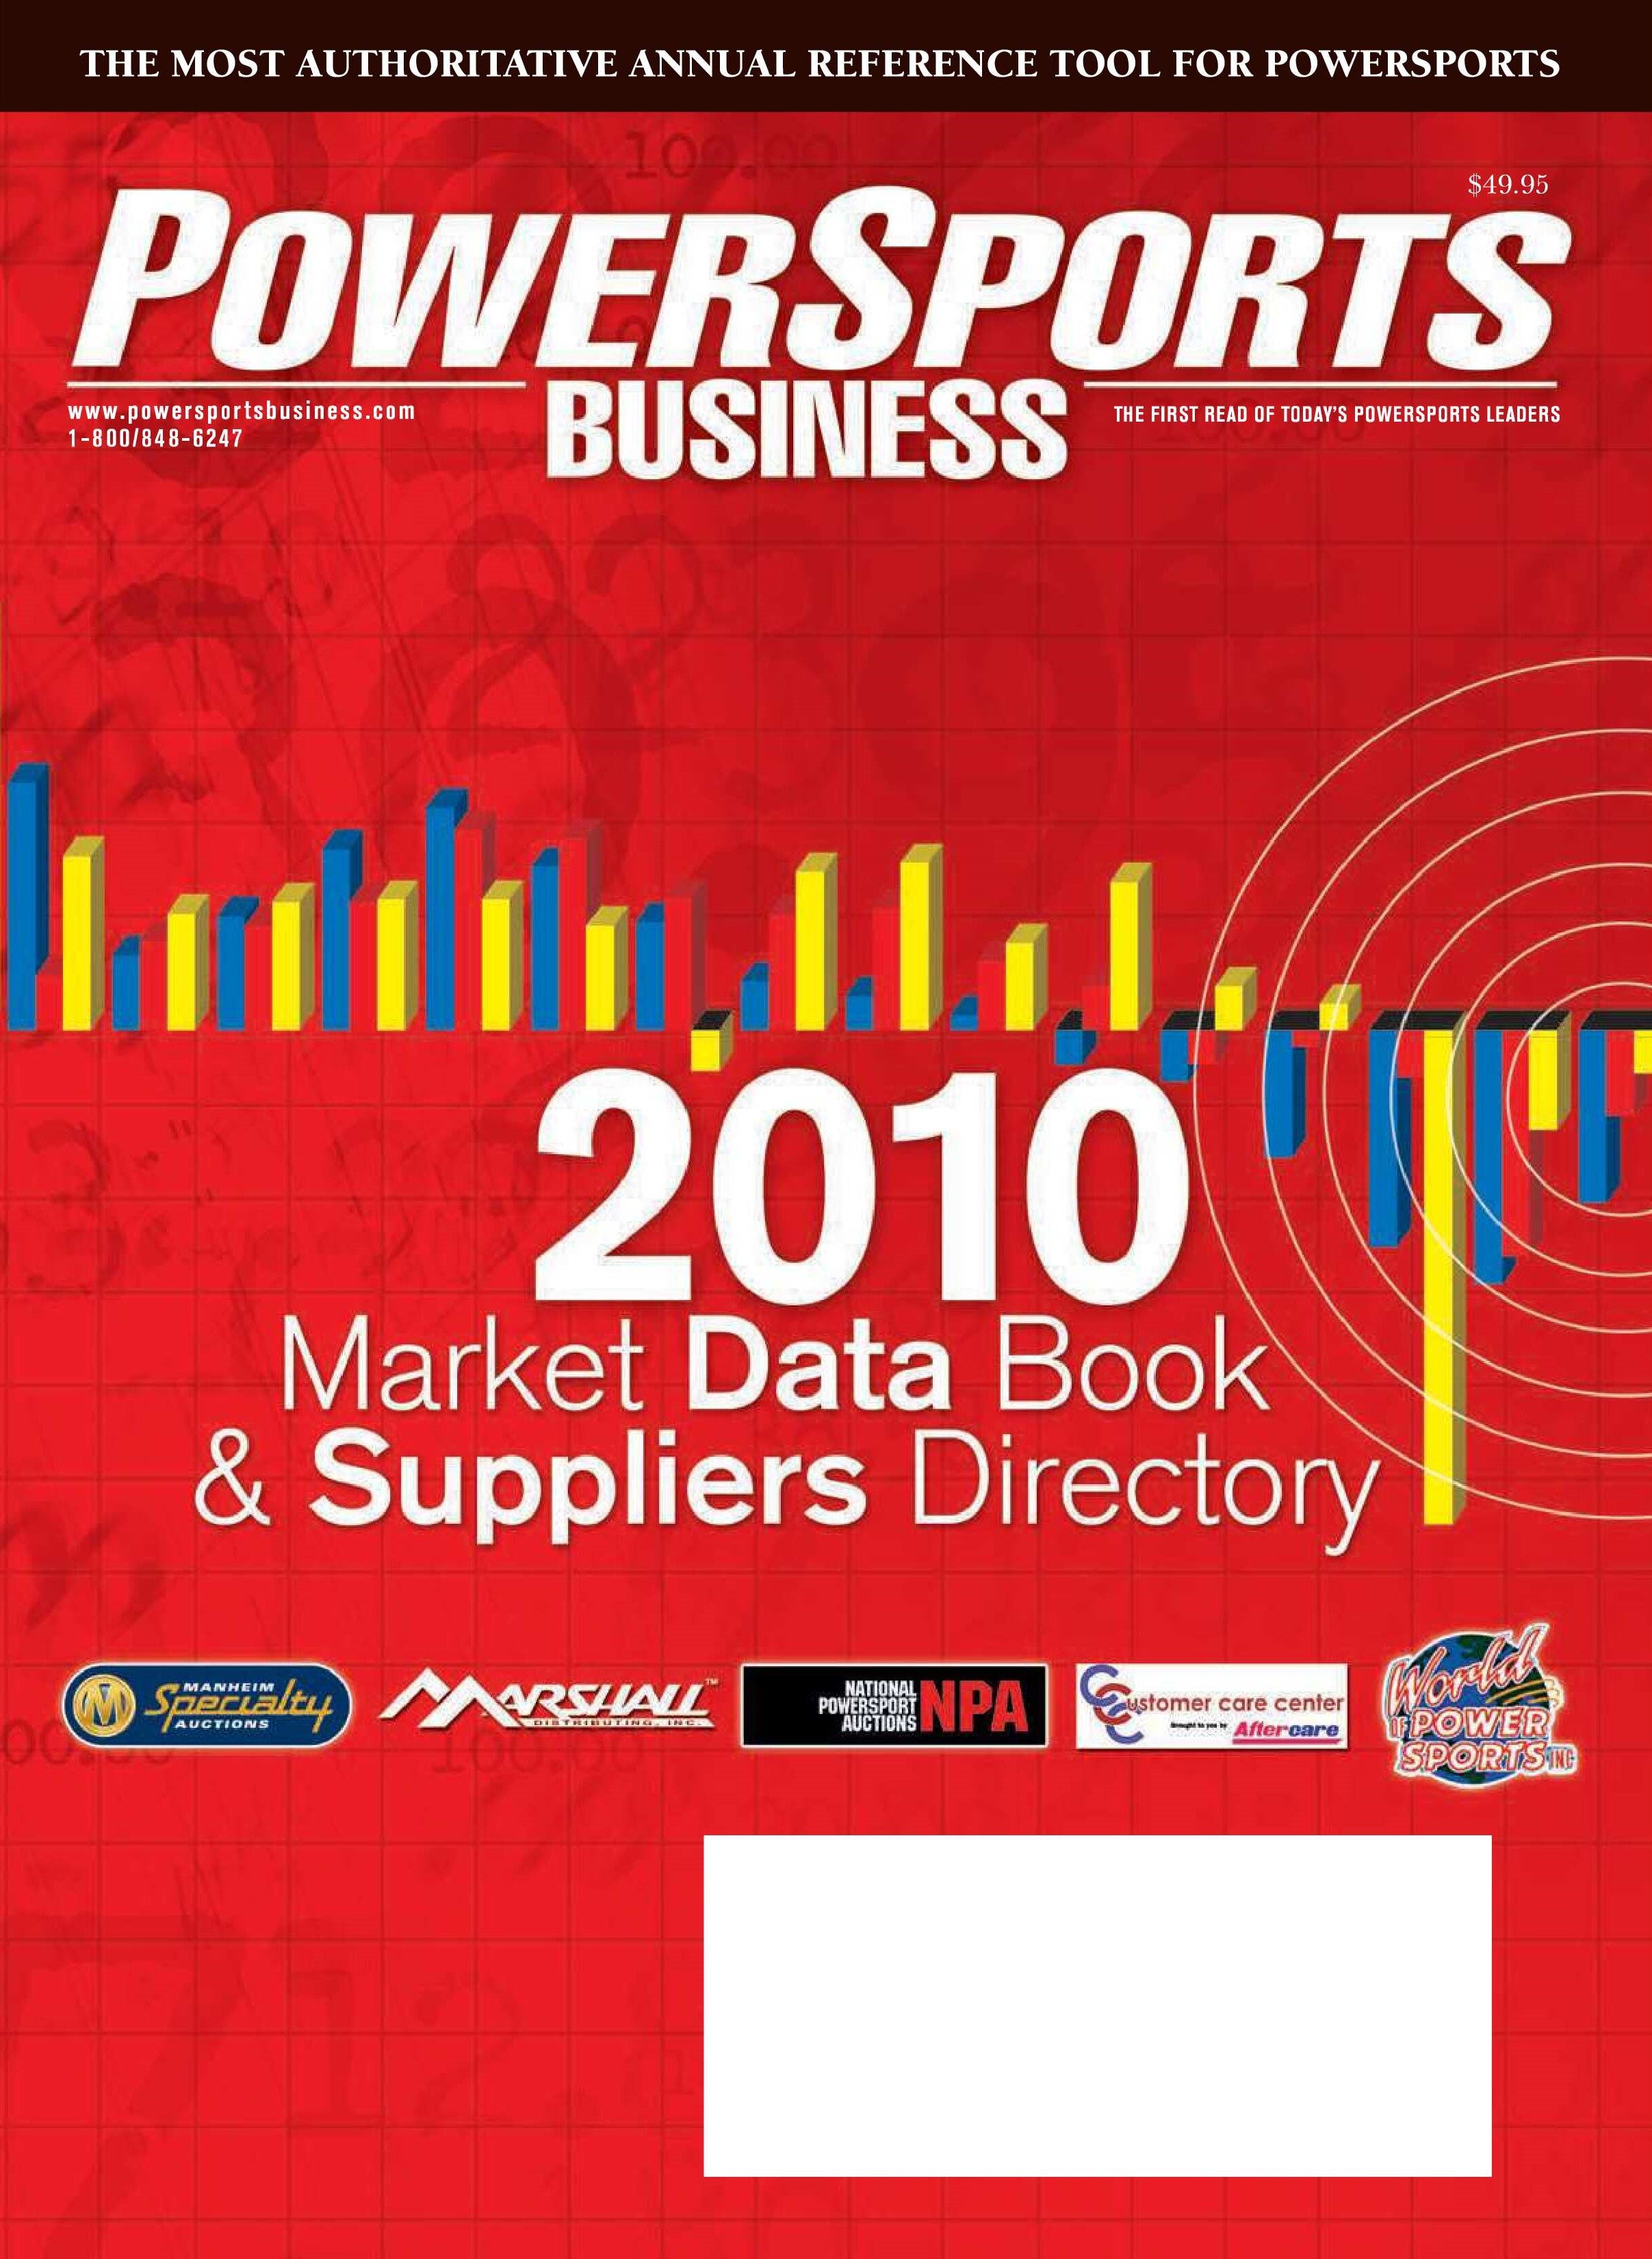 Powersports Business 2010 Market Data Book